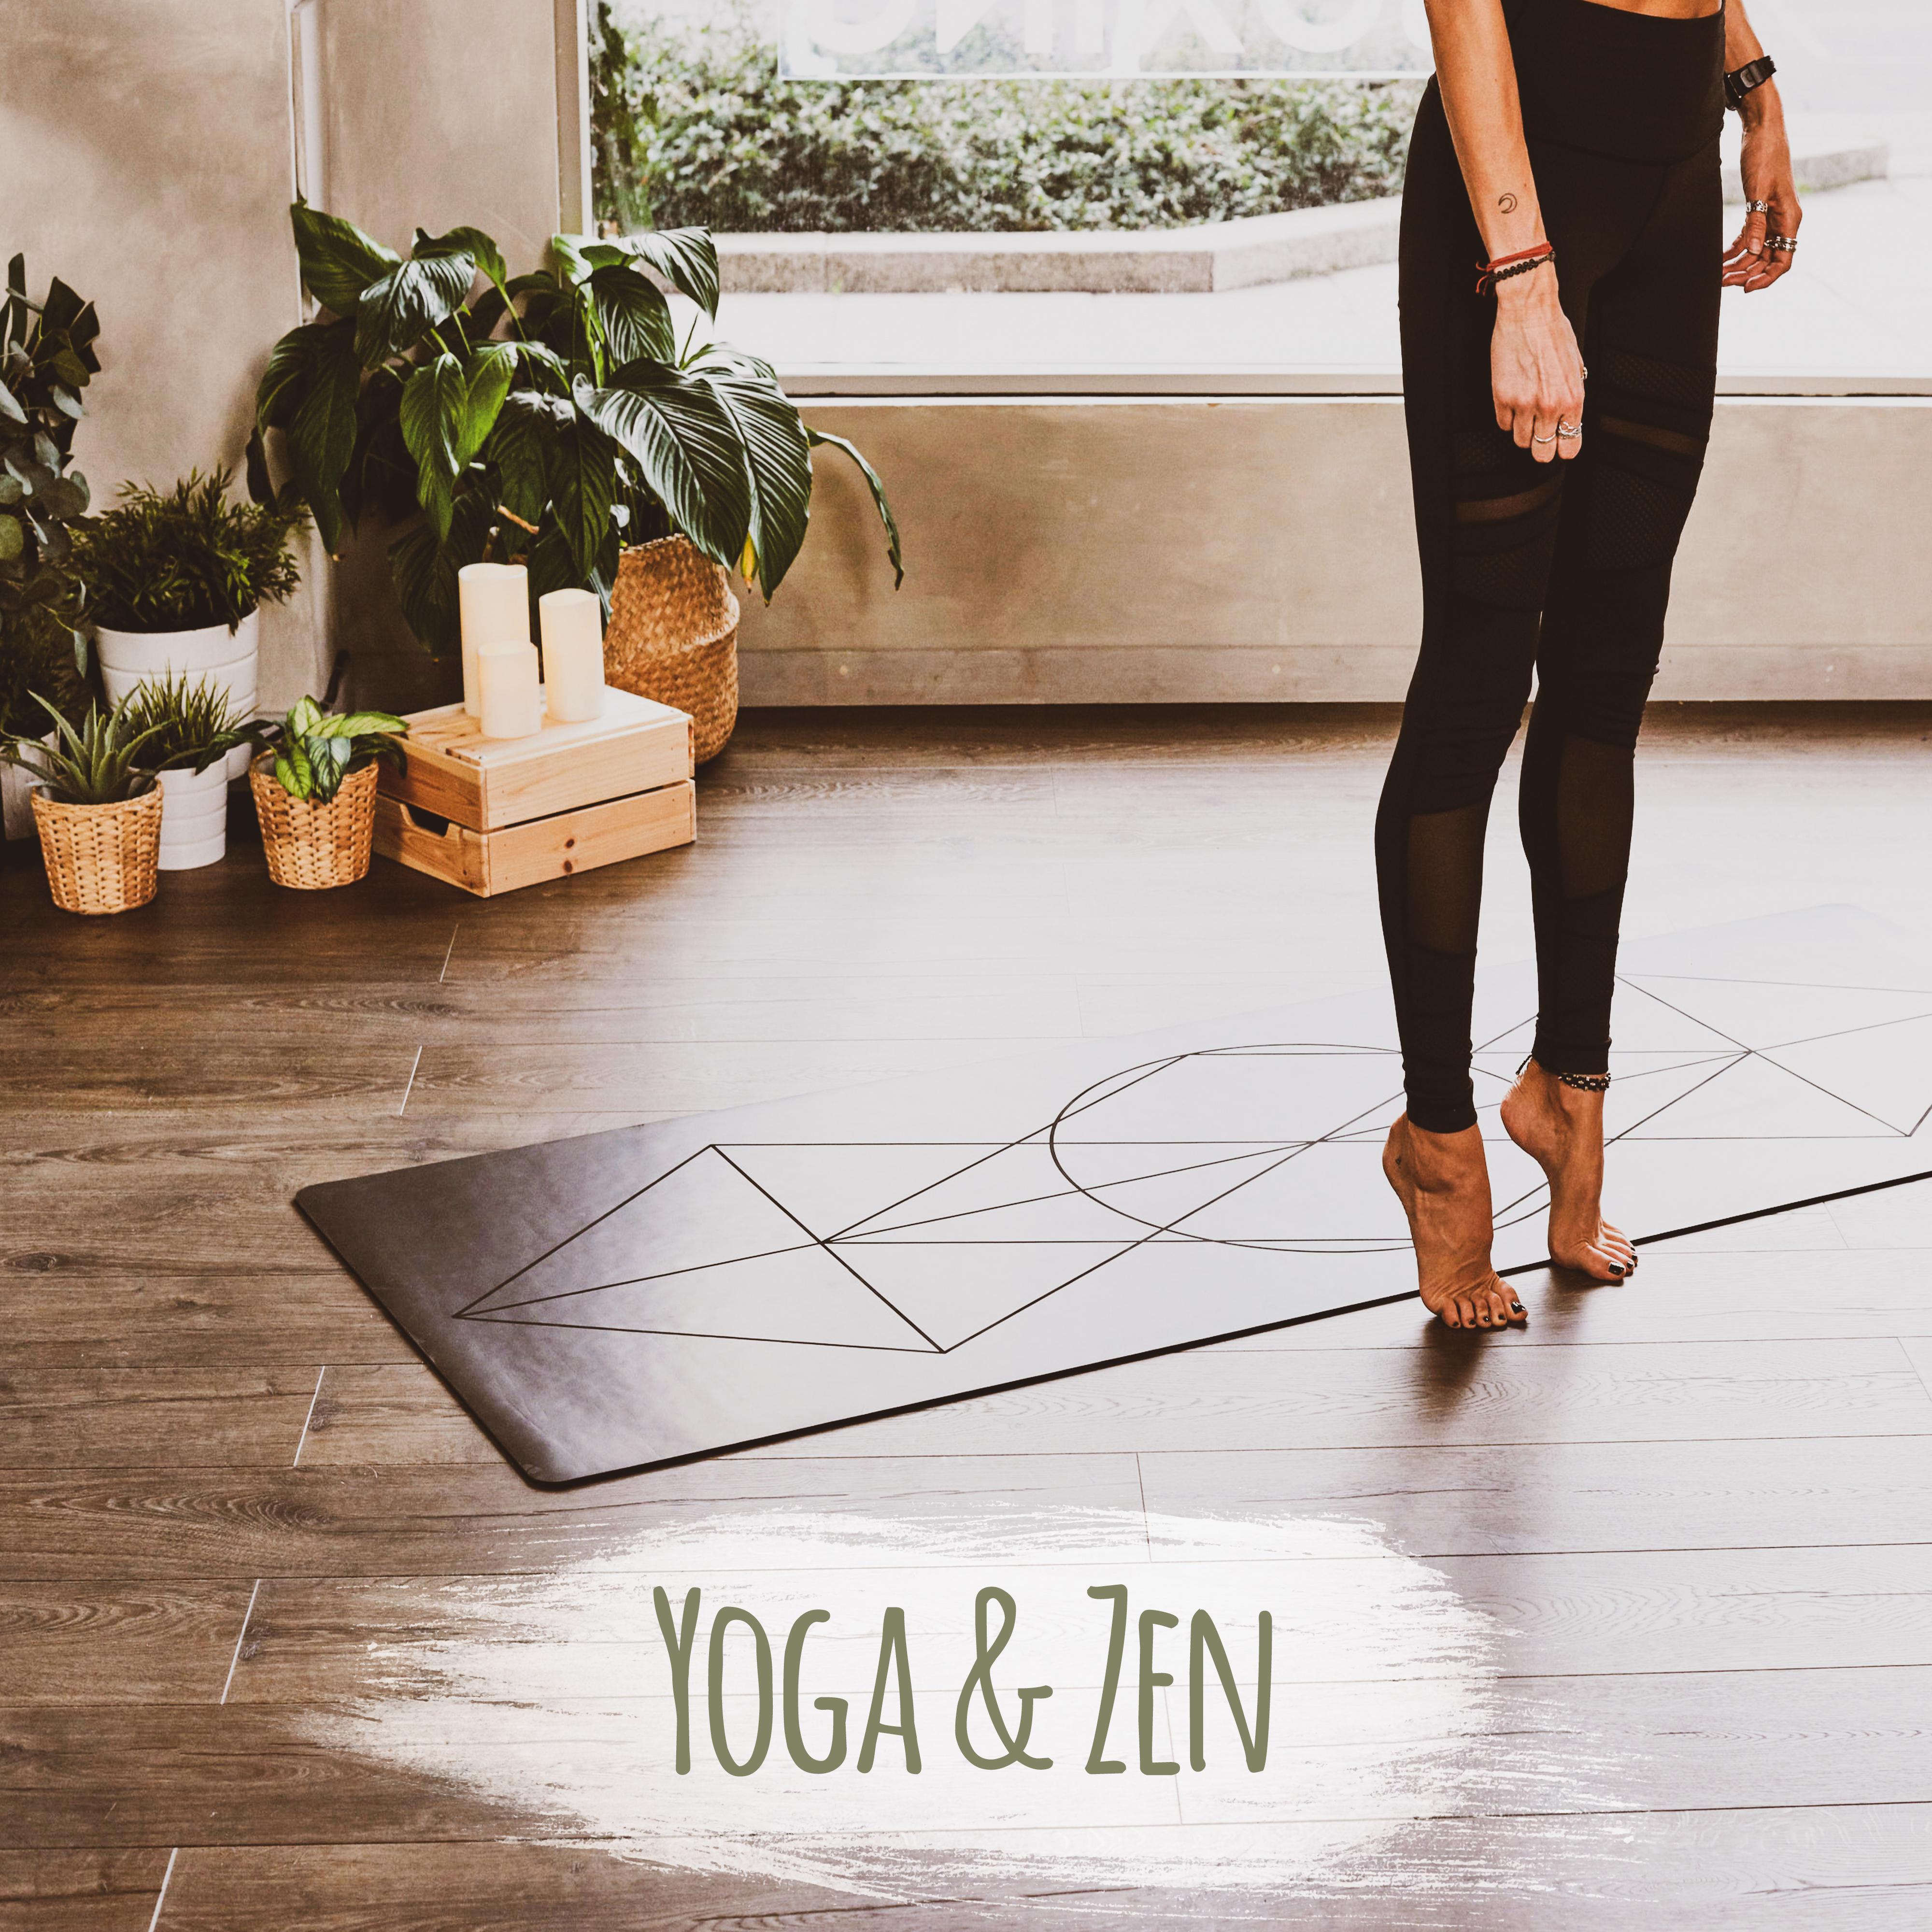 Yoga & Zen - Musical Compilation of 15 Songs for Zazen Meditation and Yoga Exercises